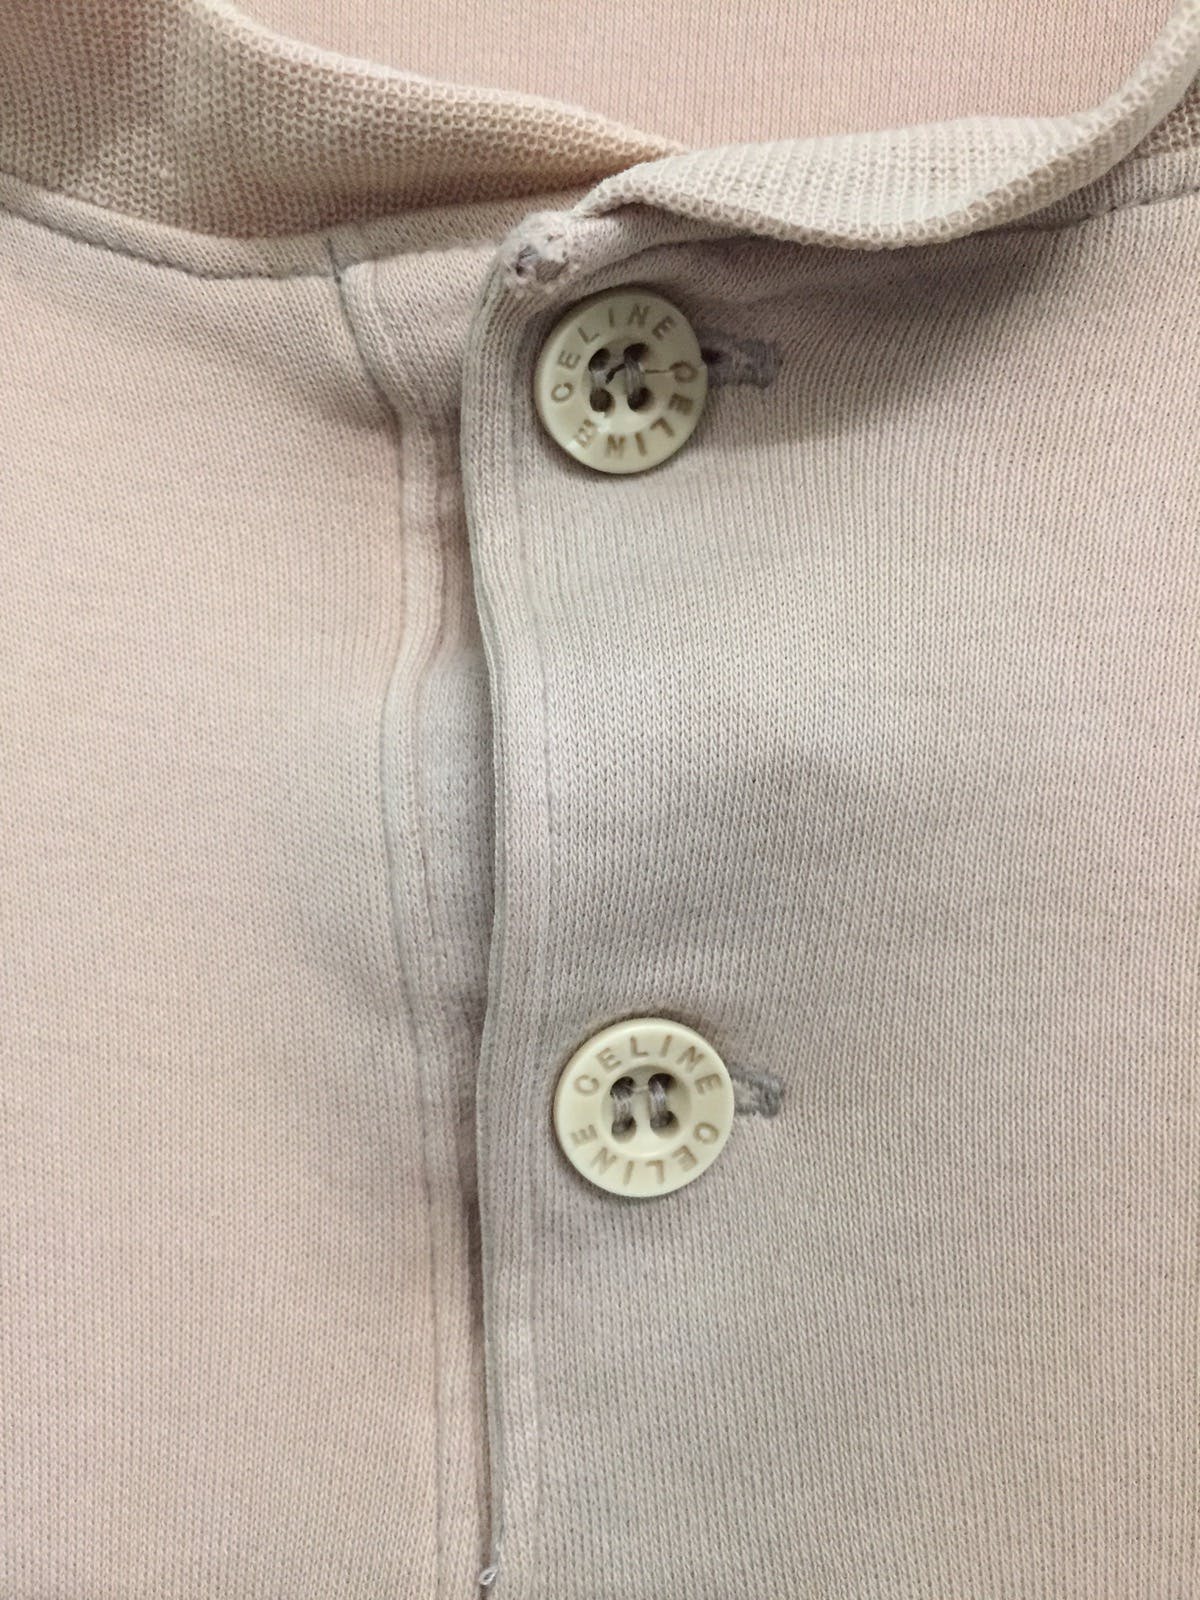 Faded CELINE Button Sweatshirt/Long Sleeve Shirt - 7